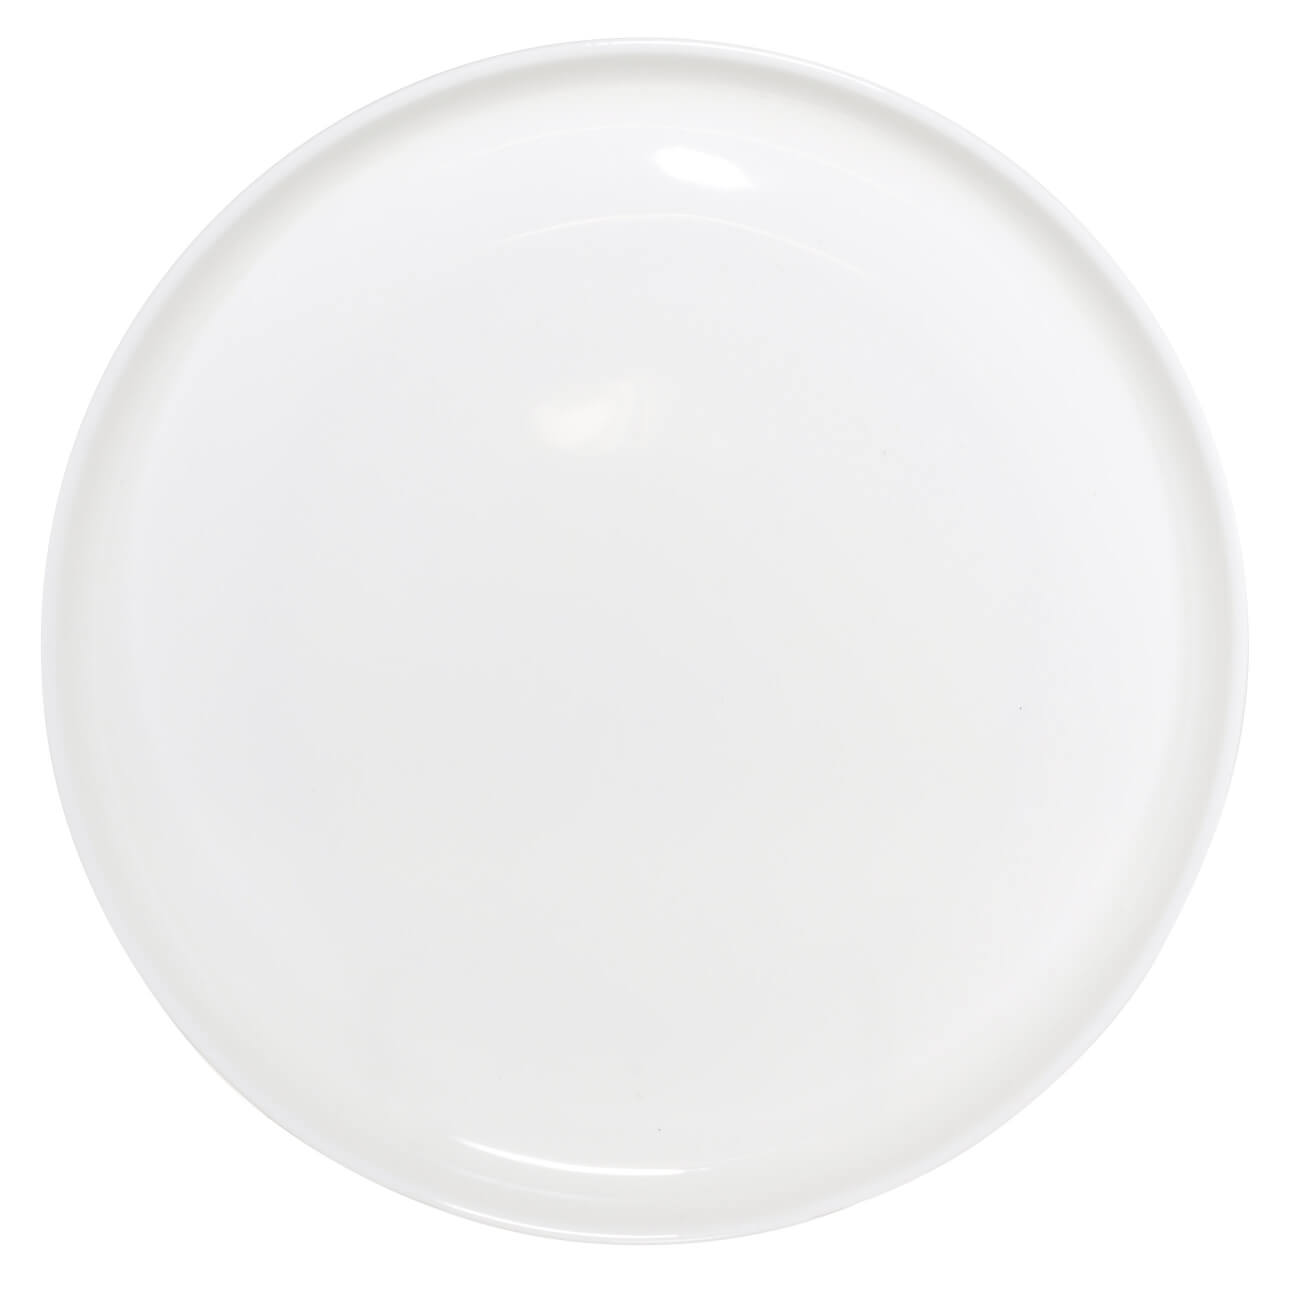 Тарелка обеденная, 26 см, фарфор F, белая, Ideal white керамическая обеденная тарелка perfecto linea